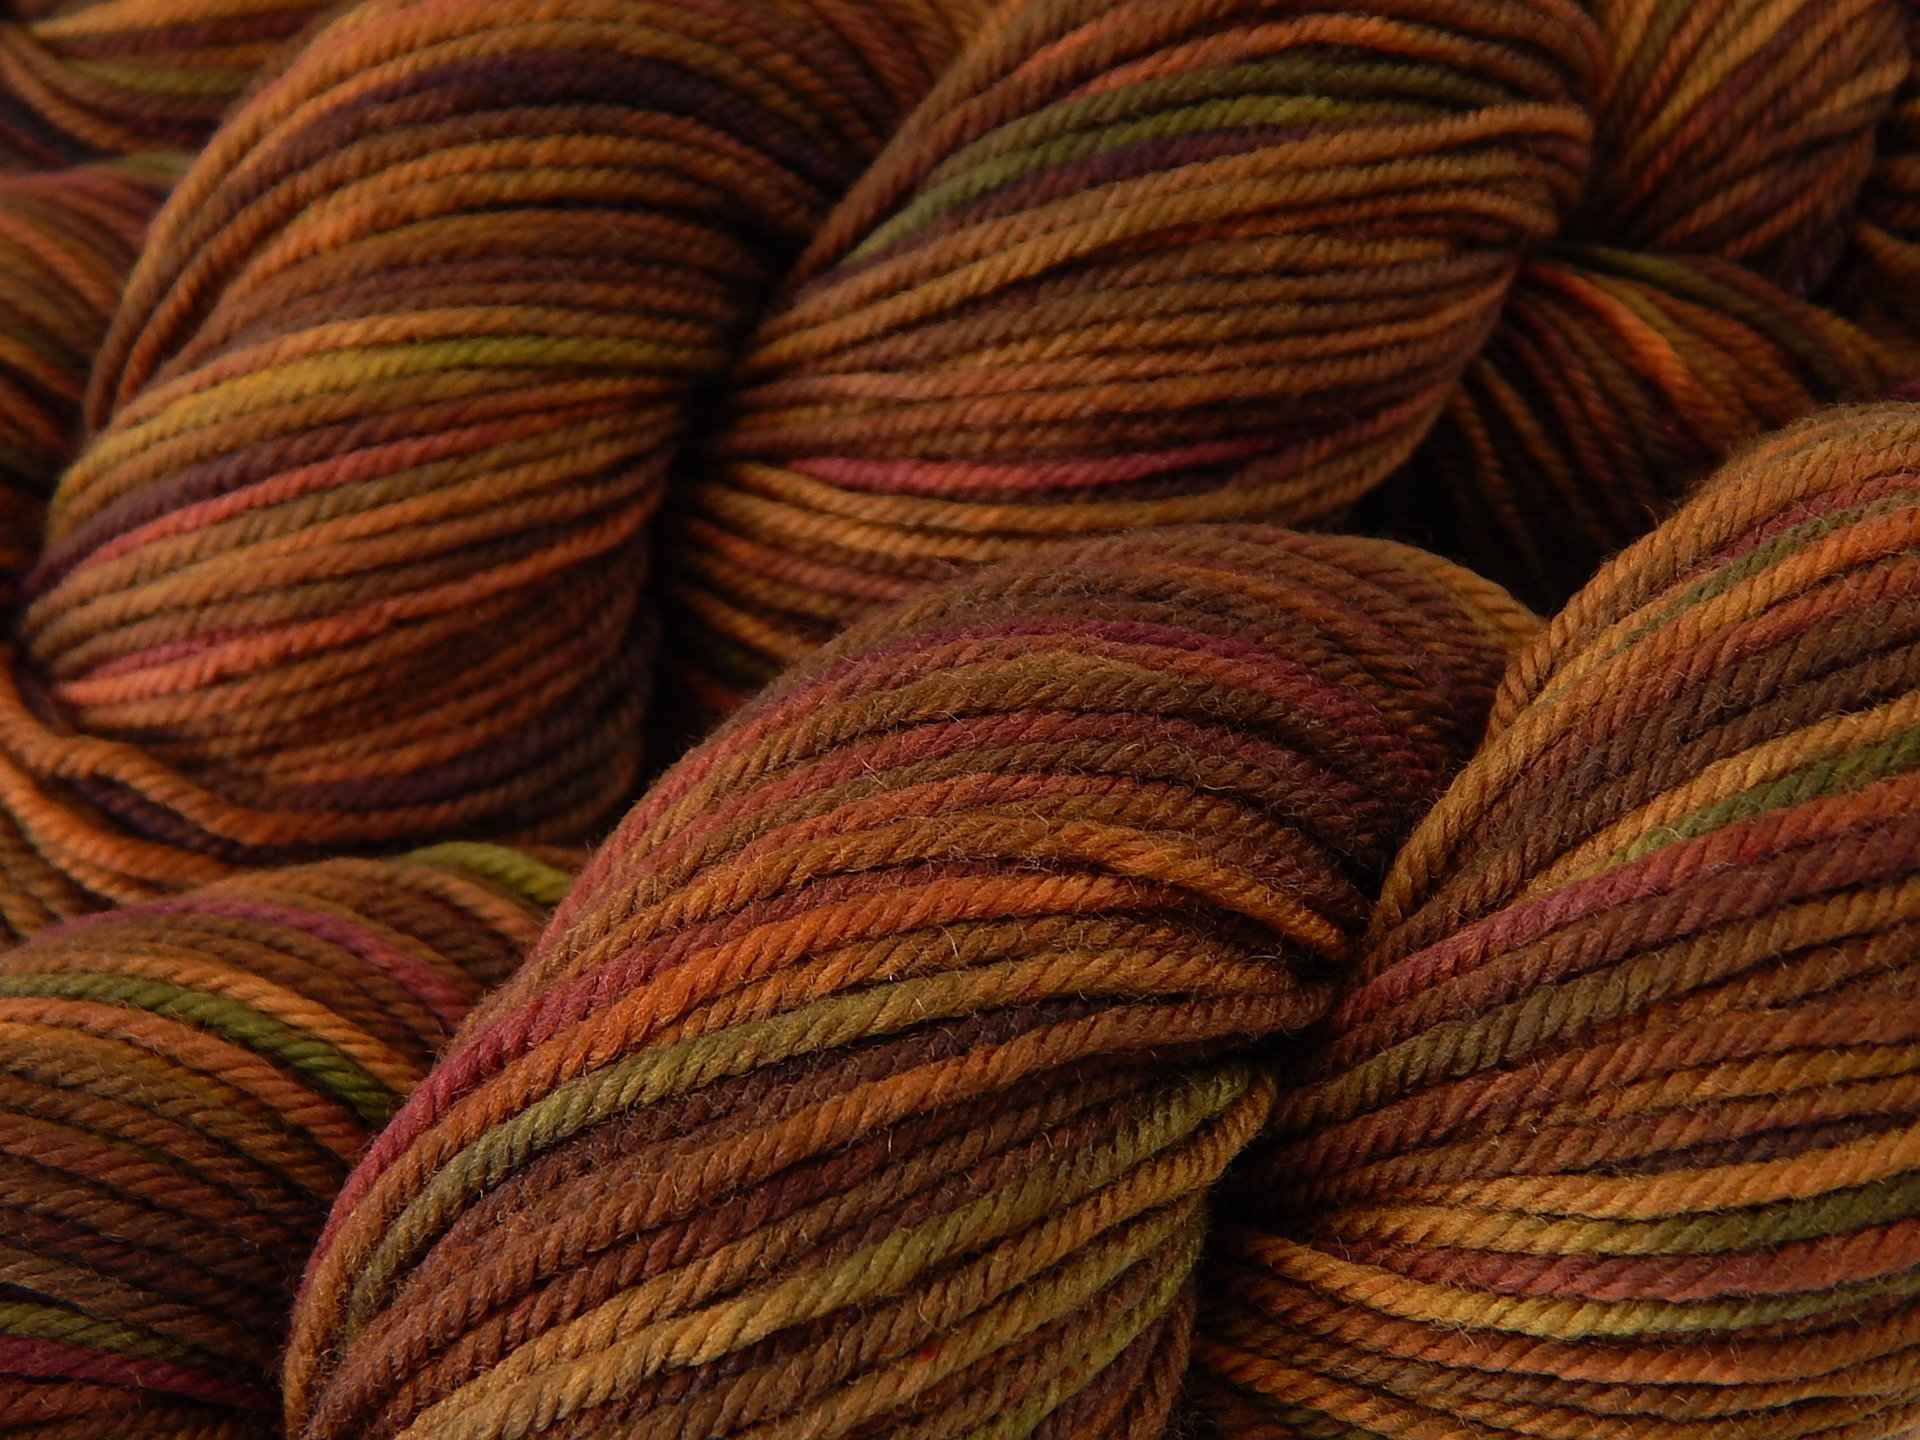 Hand Dyed Yarn, DK Weight Superwash Merino Wool - Clove Multi - Brown Burgundy Gold Indie Dyed Knitting Yarn